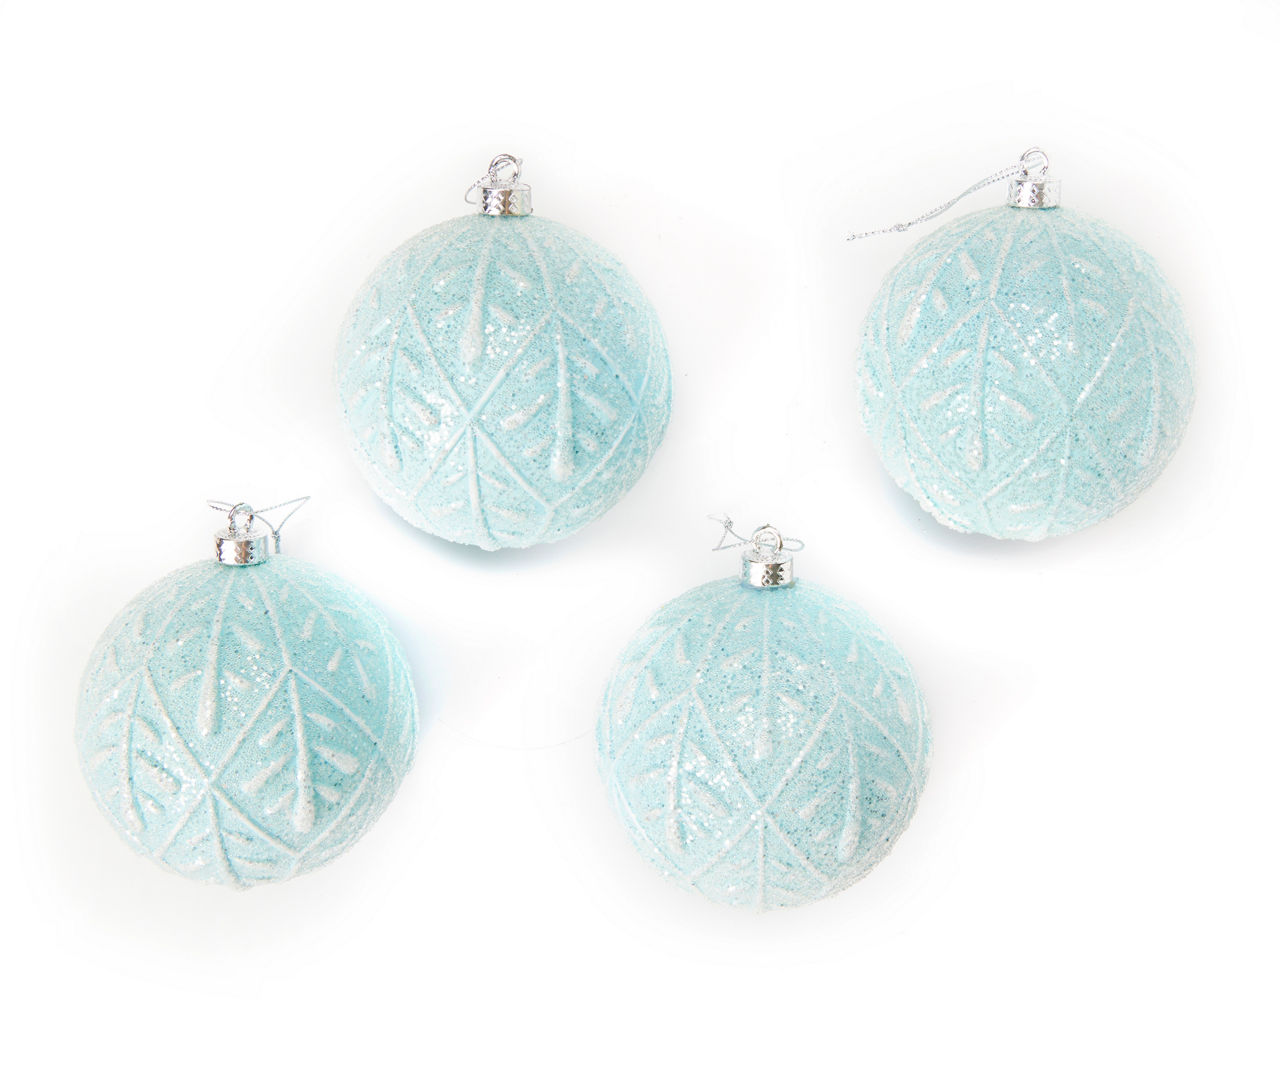 Light Blue Leaf Glitter Ball Ornaments, 4-Pack